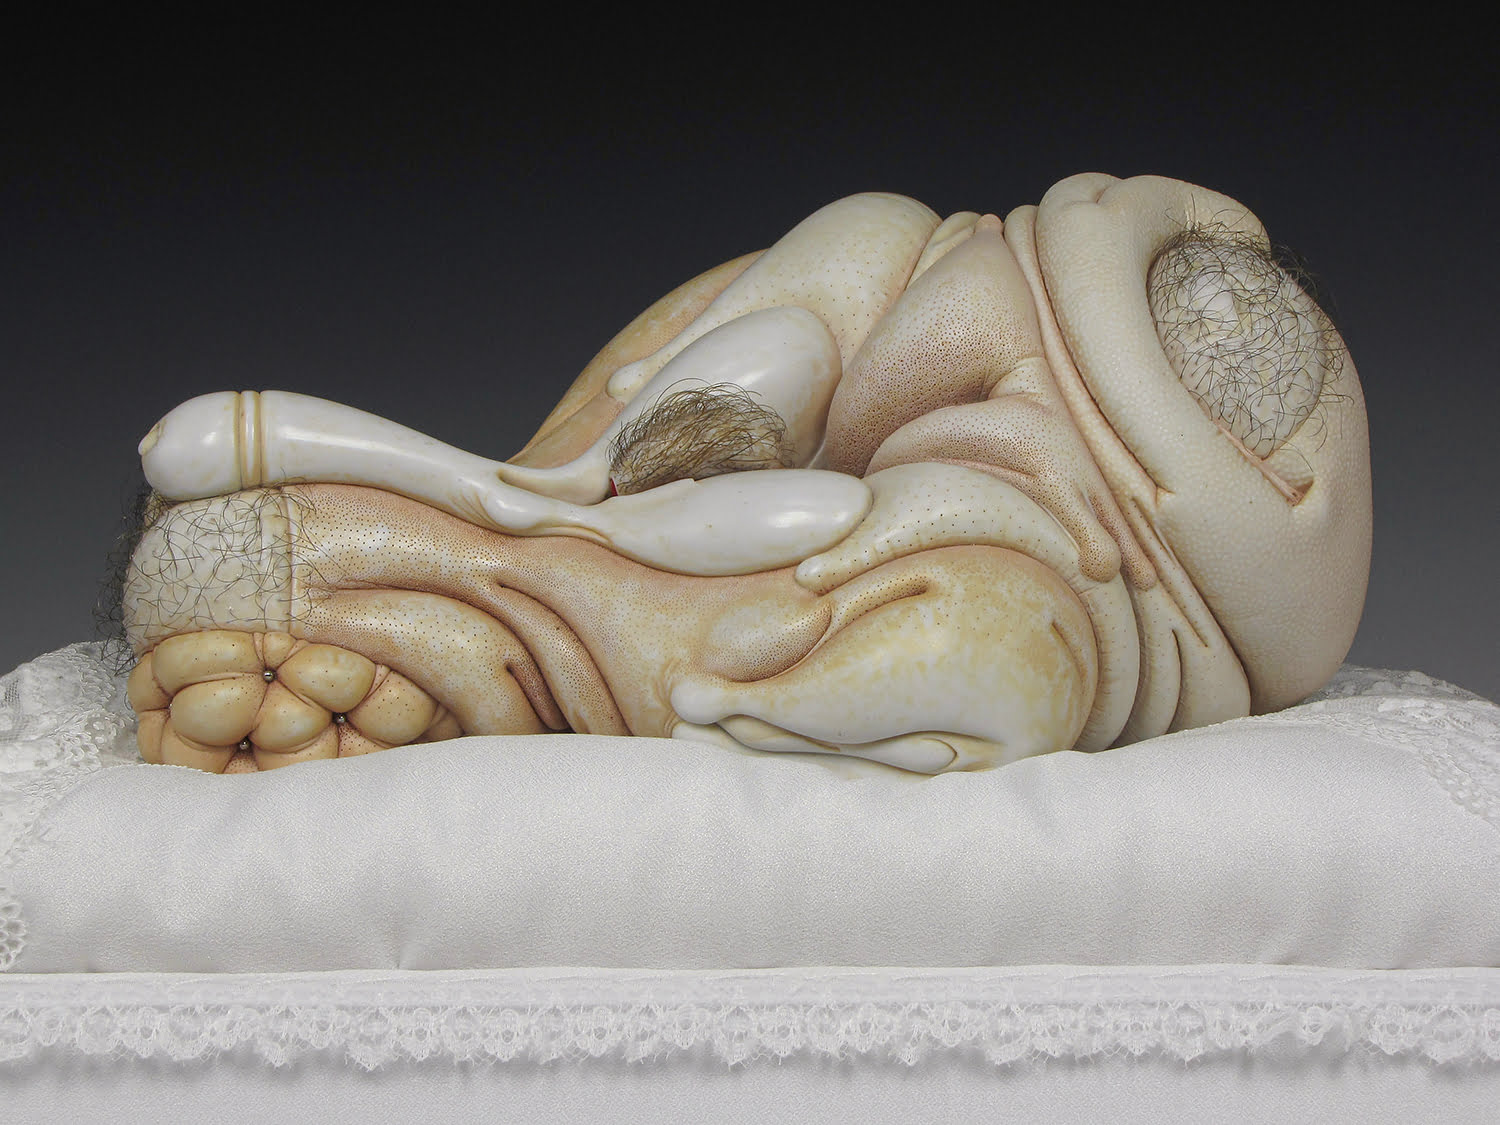 Jason Briggs "Angel" (alternate view). Porcelain, hair, and mixed media sculptural ceramic art.